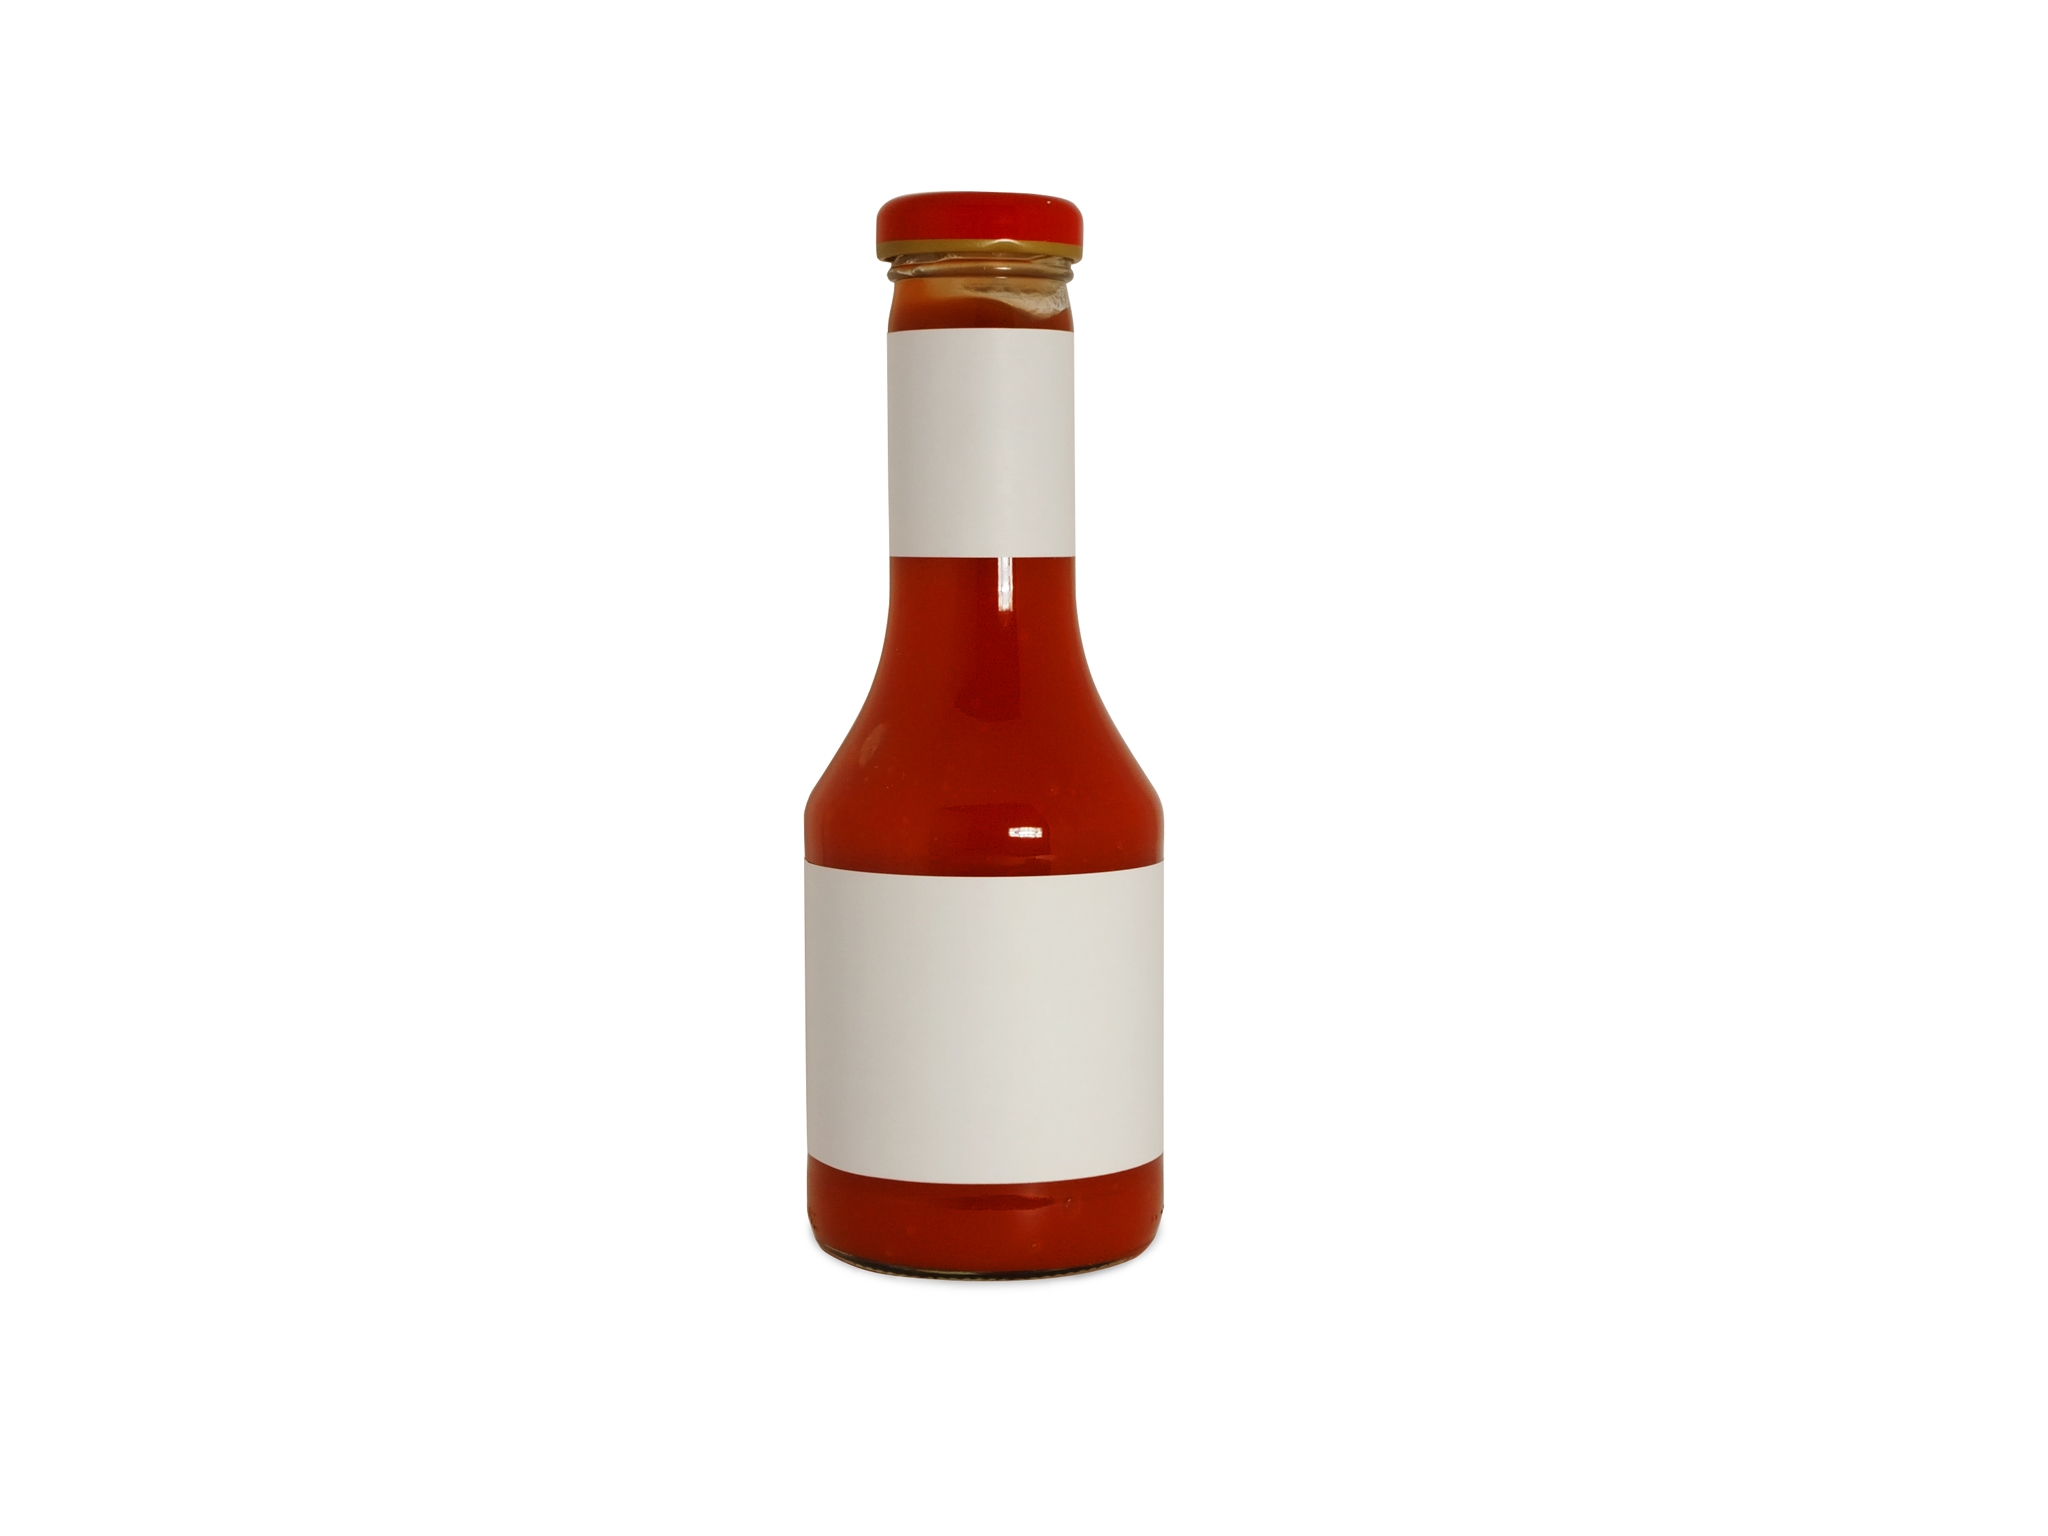 T me bank sauce. Бутылка для соуса. Соус кетчуп в бутылке. Соус без фона. Банка кетчупа без фона.